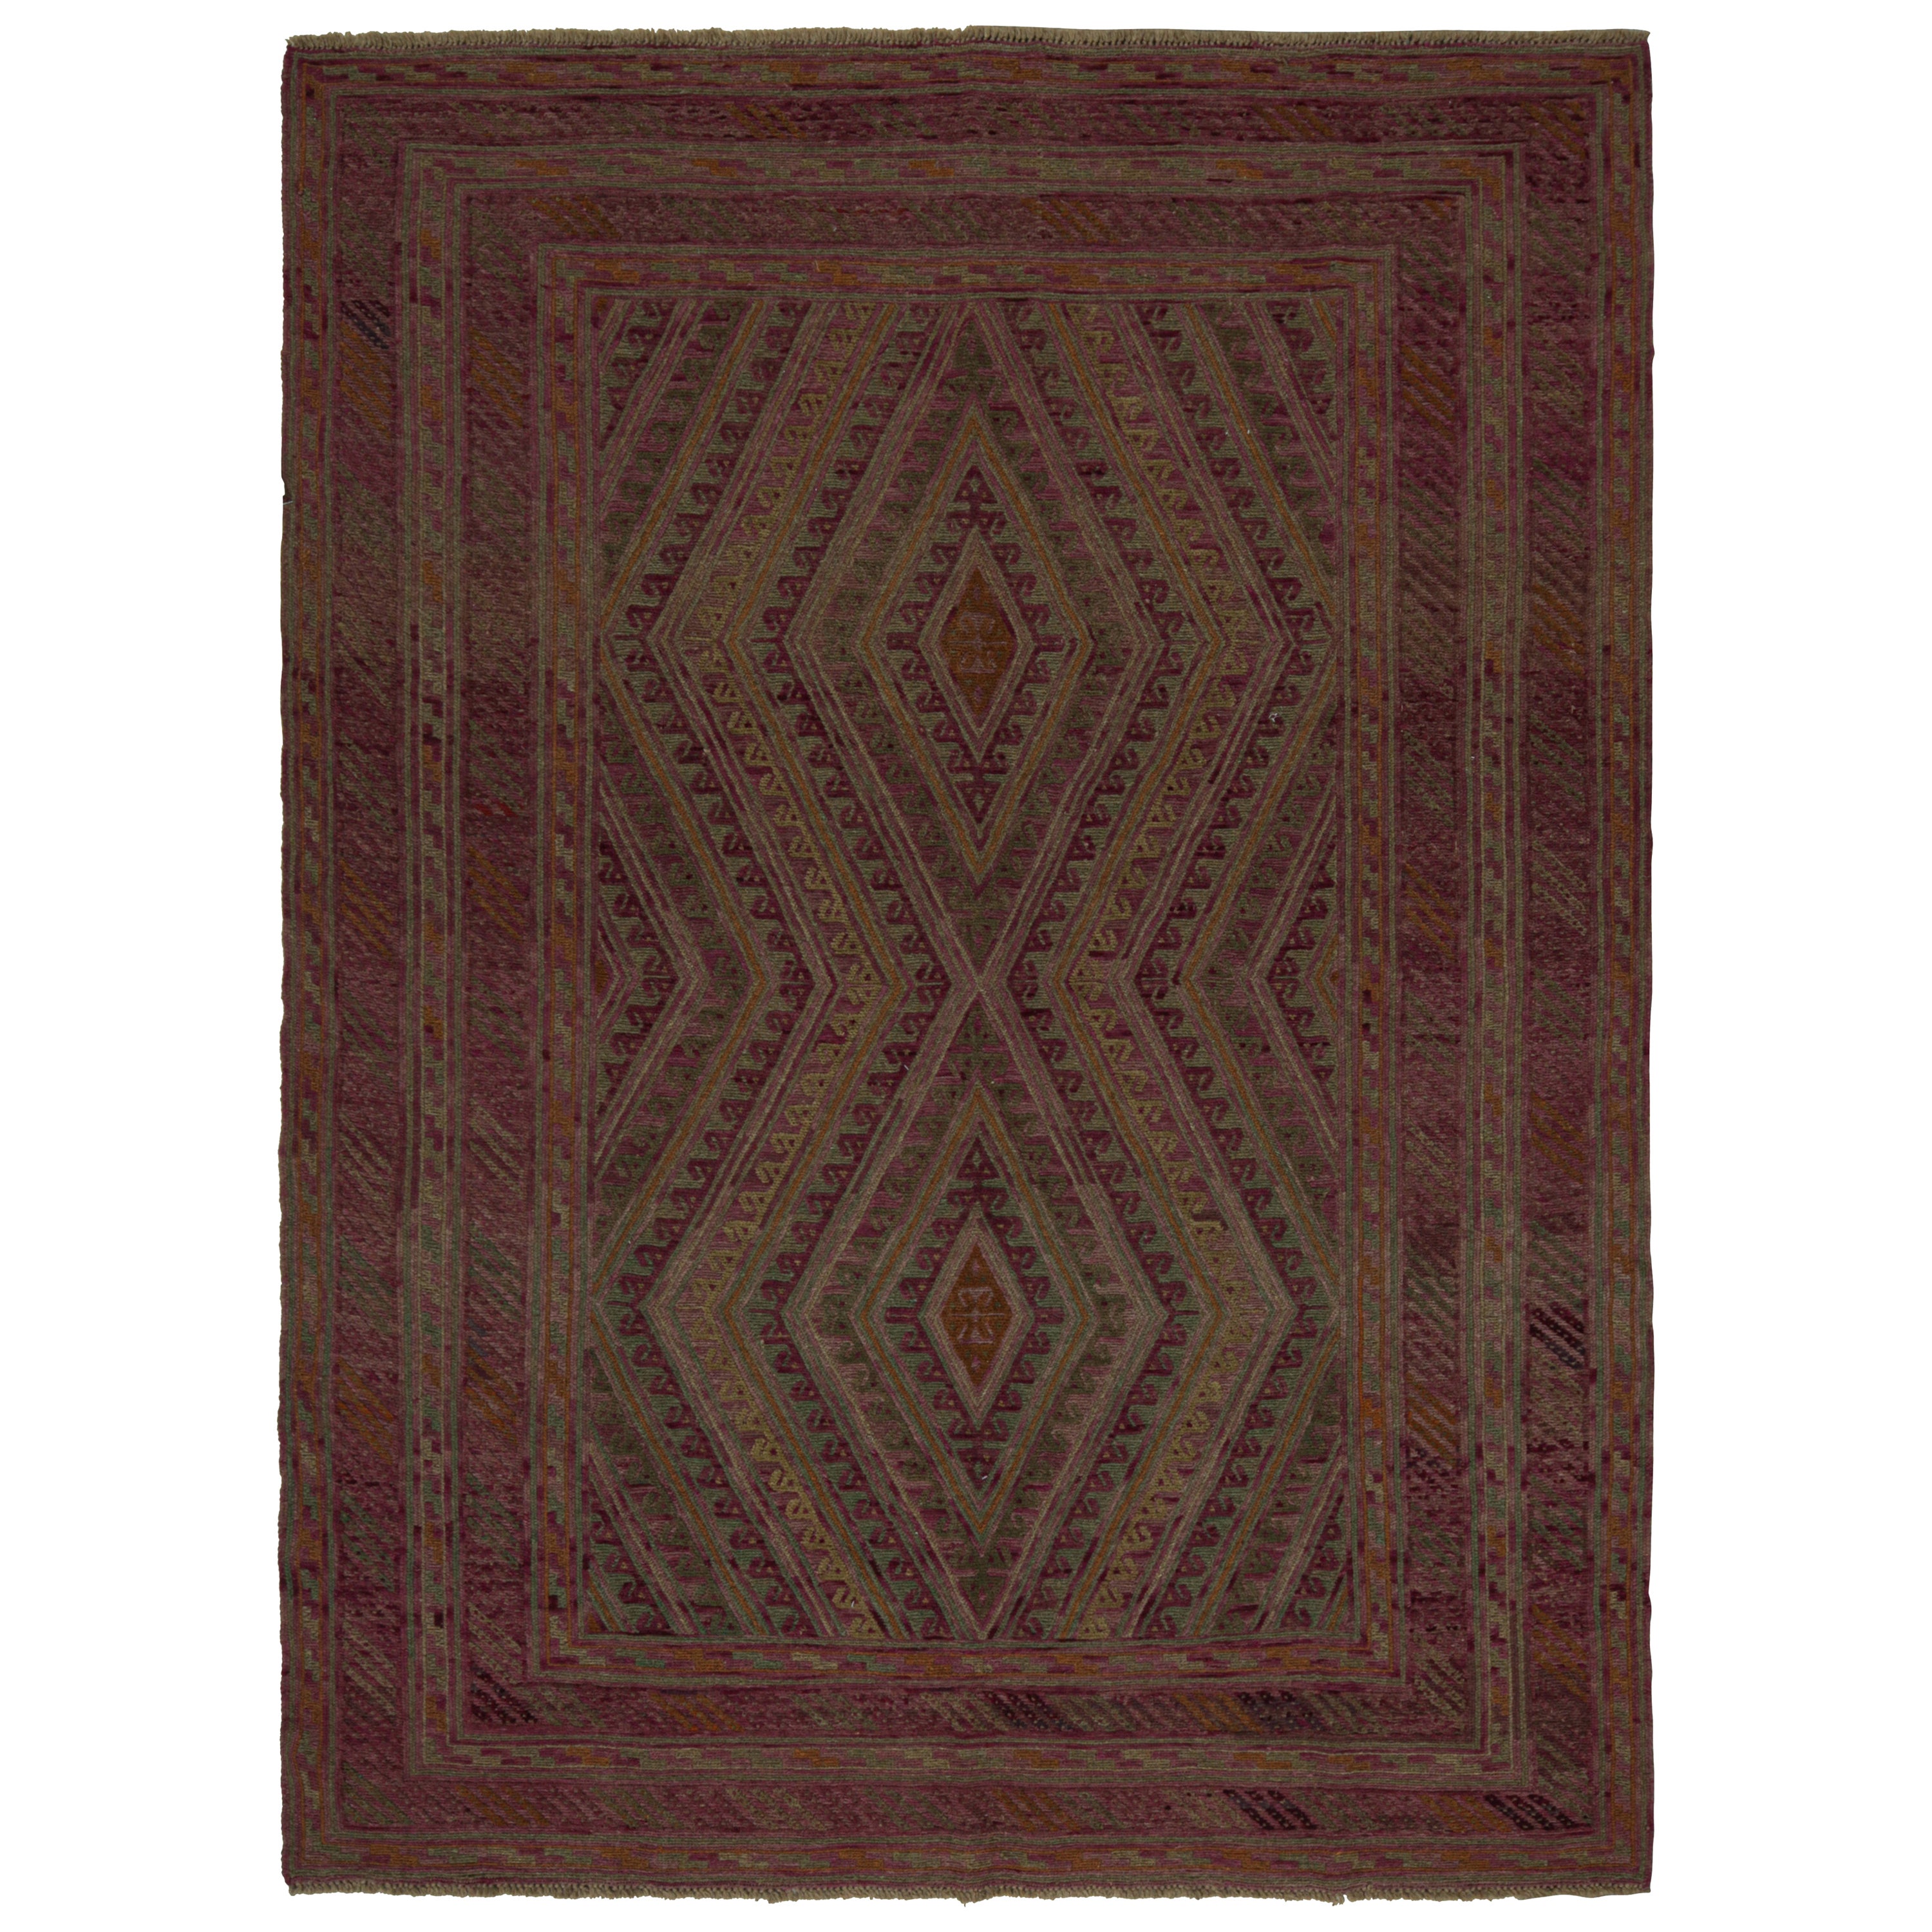 Rug & Kilim’s Mashwani Afghan Tribal Rug in Rust Tones with Geometric Patterns